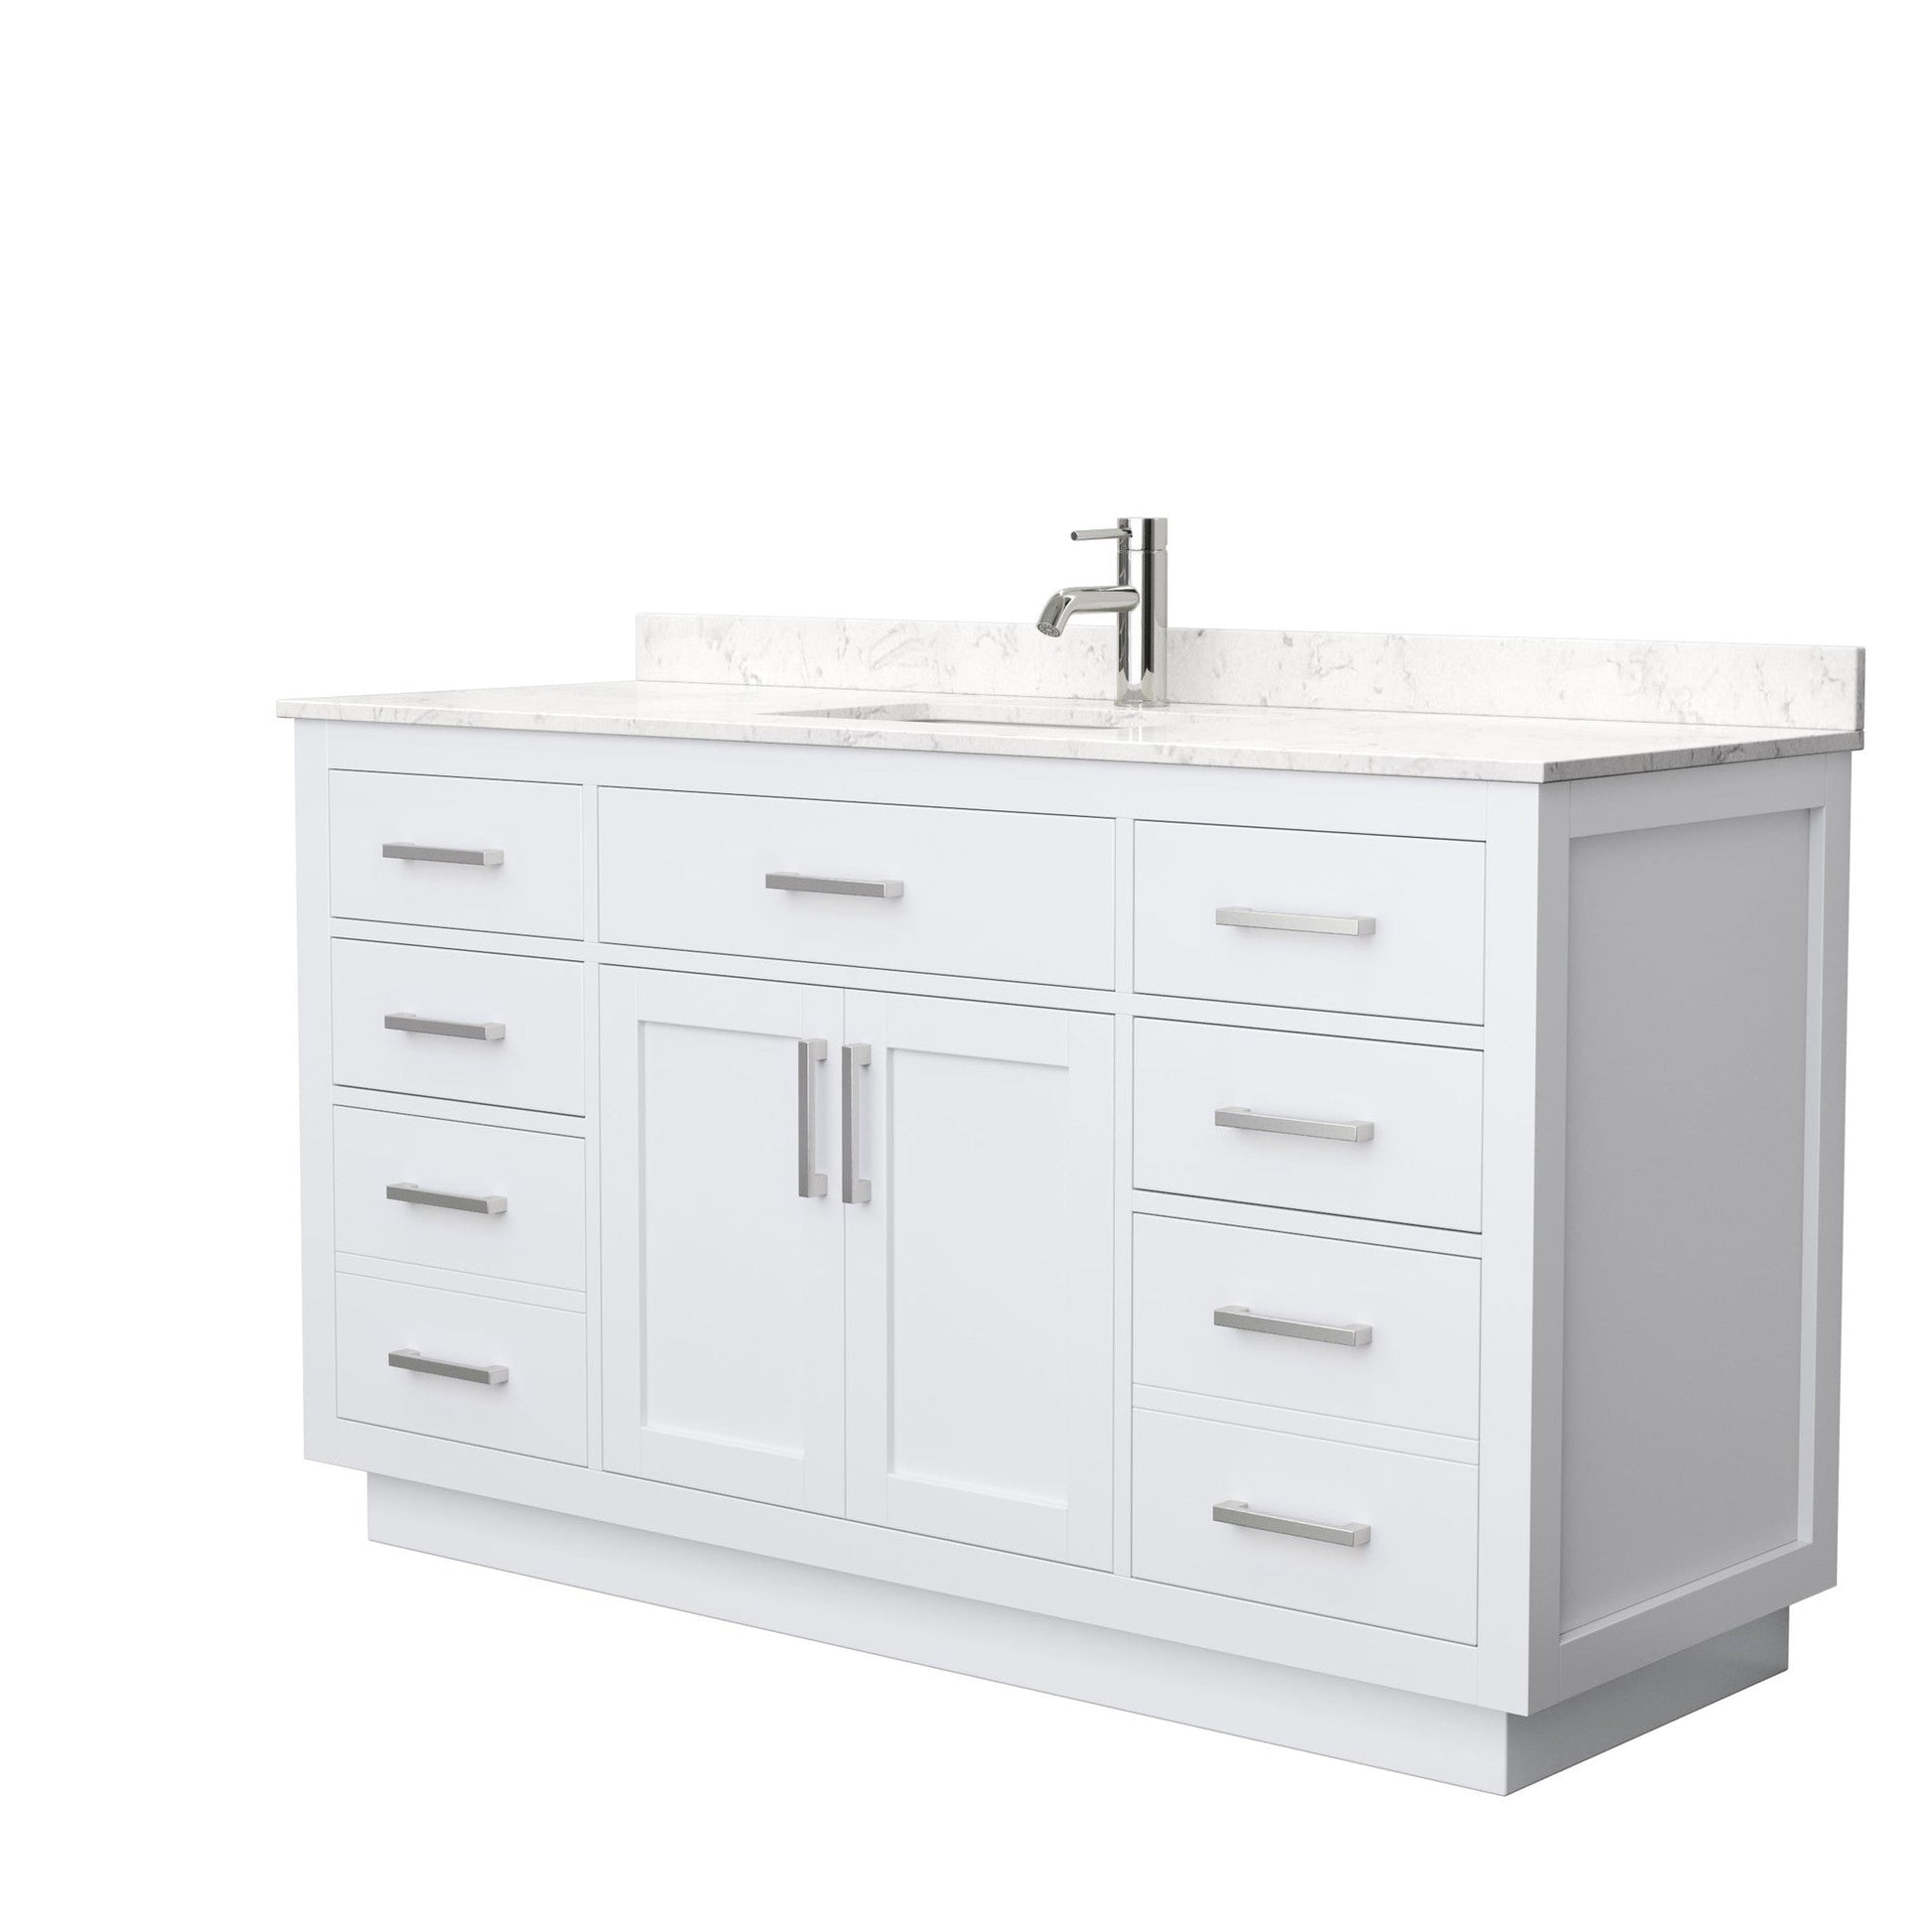 Beckett 60" Single Bathroom Vanity With Toe Kick in White, Carrara Cultured Marble Countertop, Undermount Square Sink, Brushed Nickel Trim